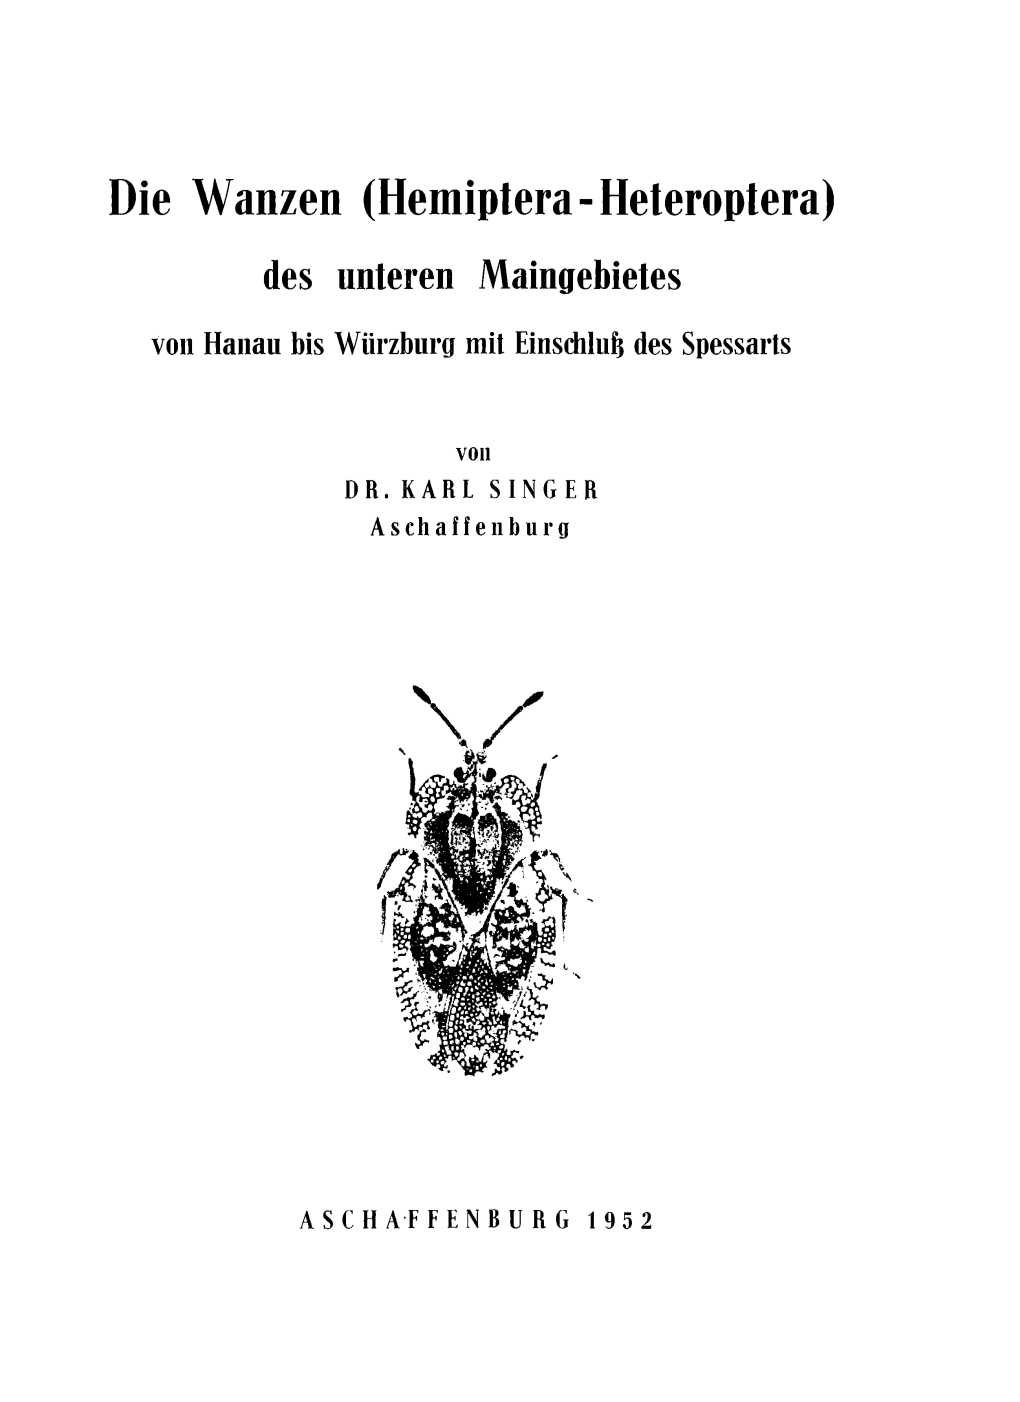 Die Wanzen (Hemiptera - Heteroptera)